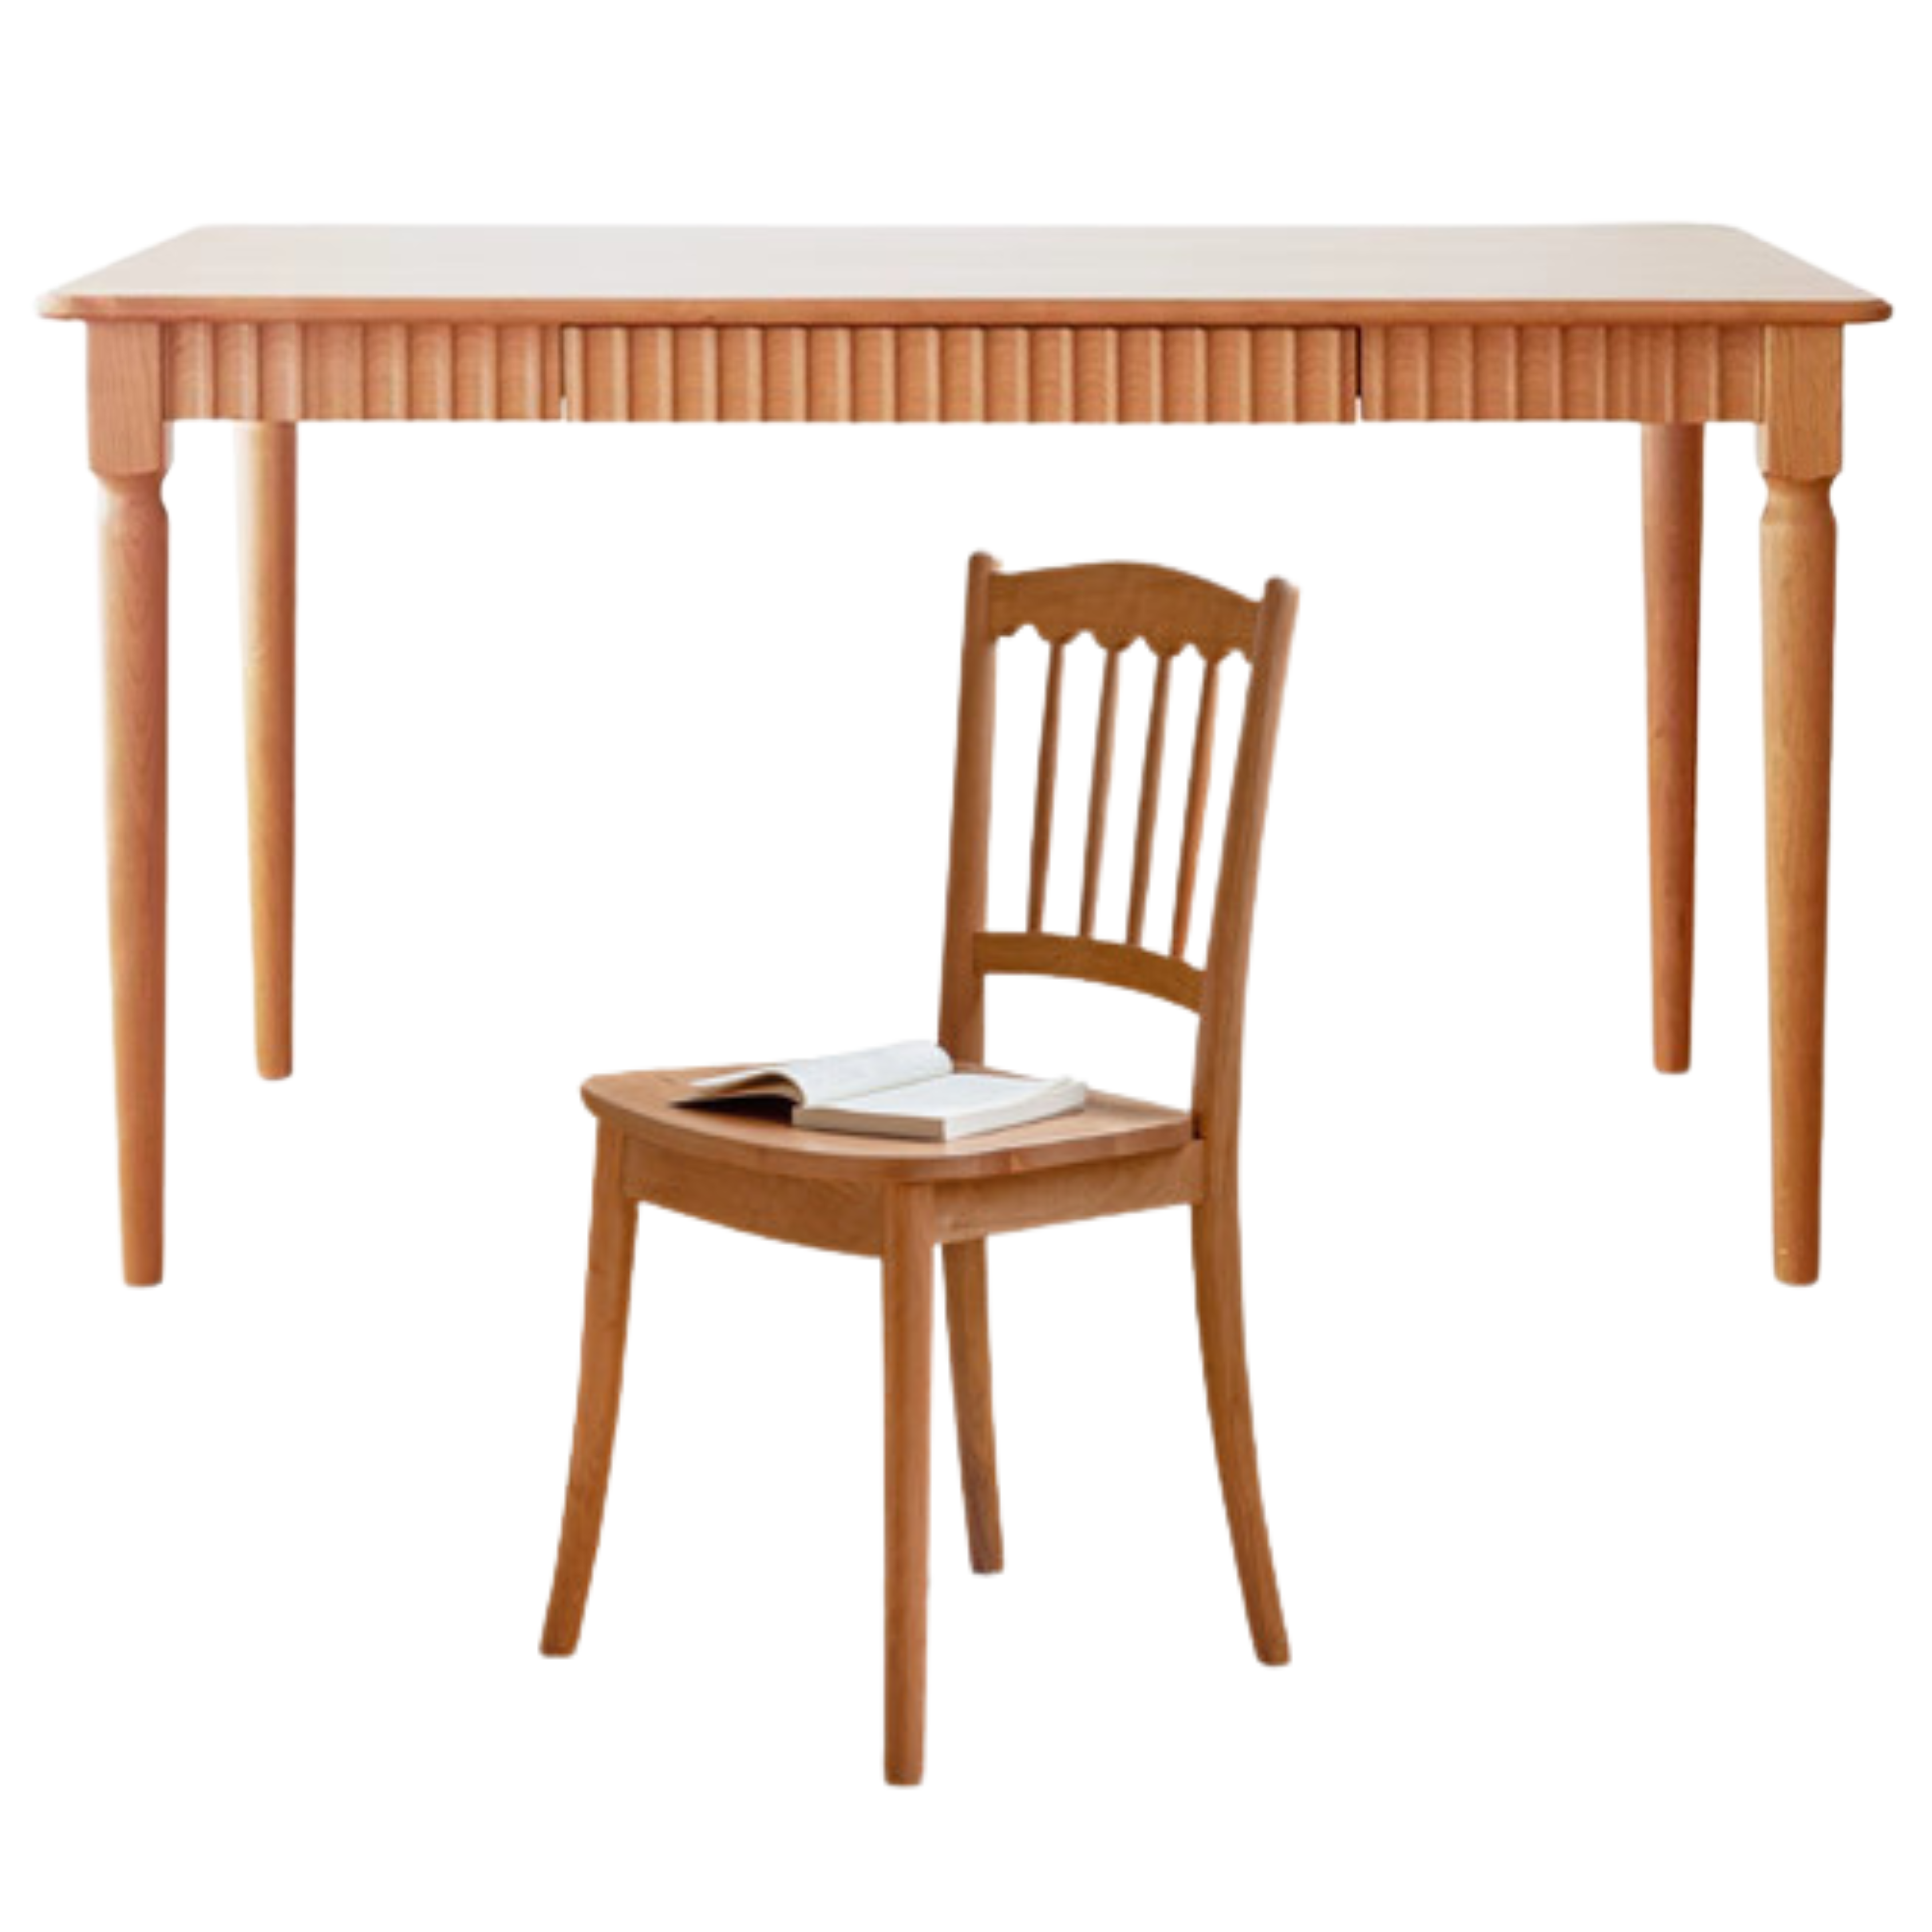 Cherry wood, light retro dining table